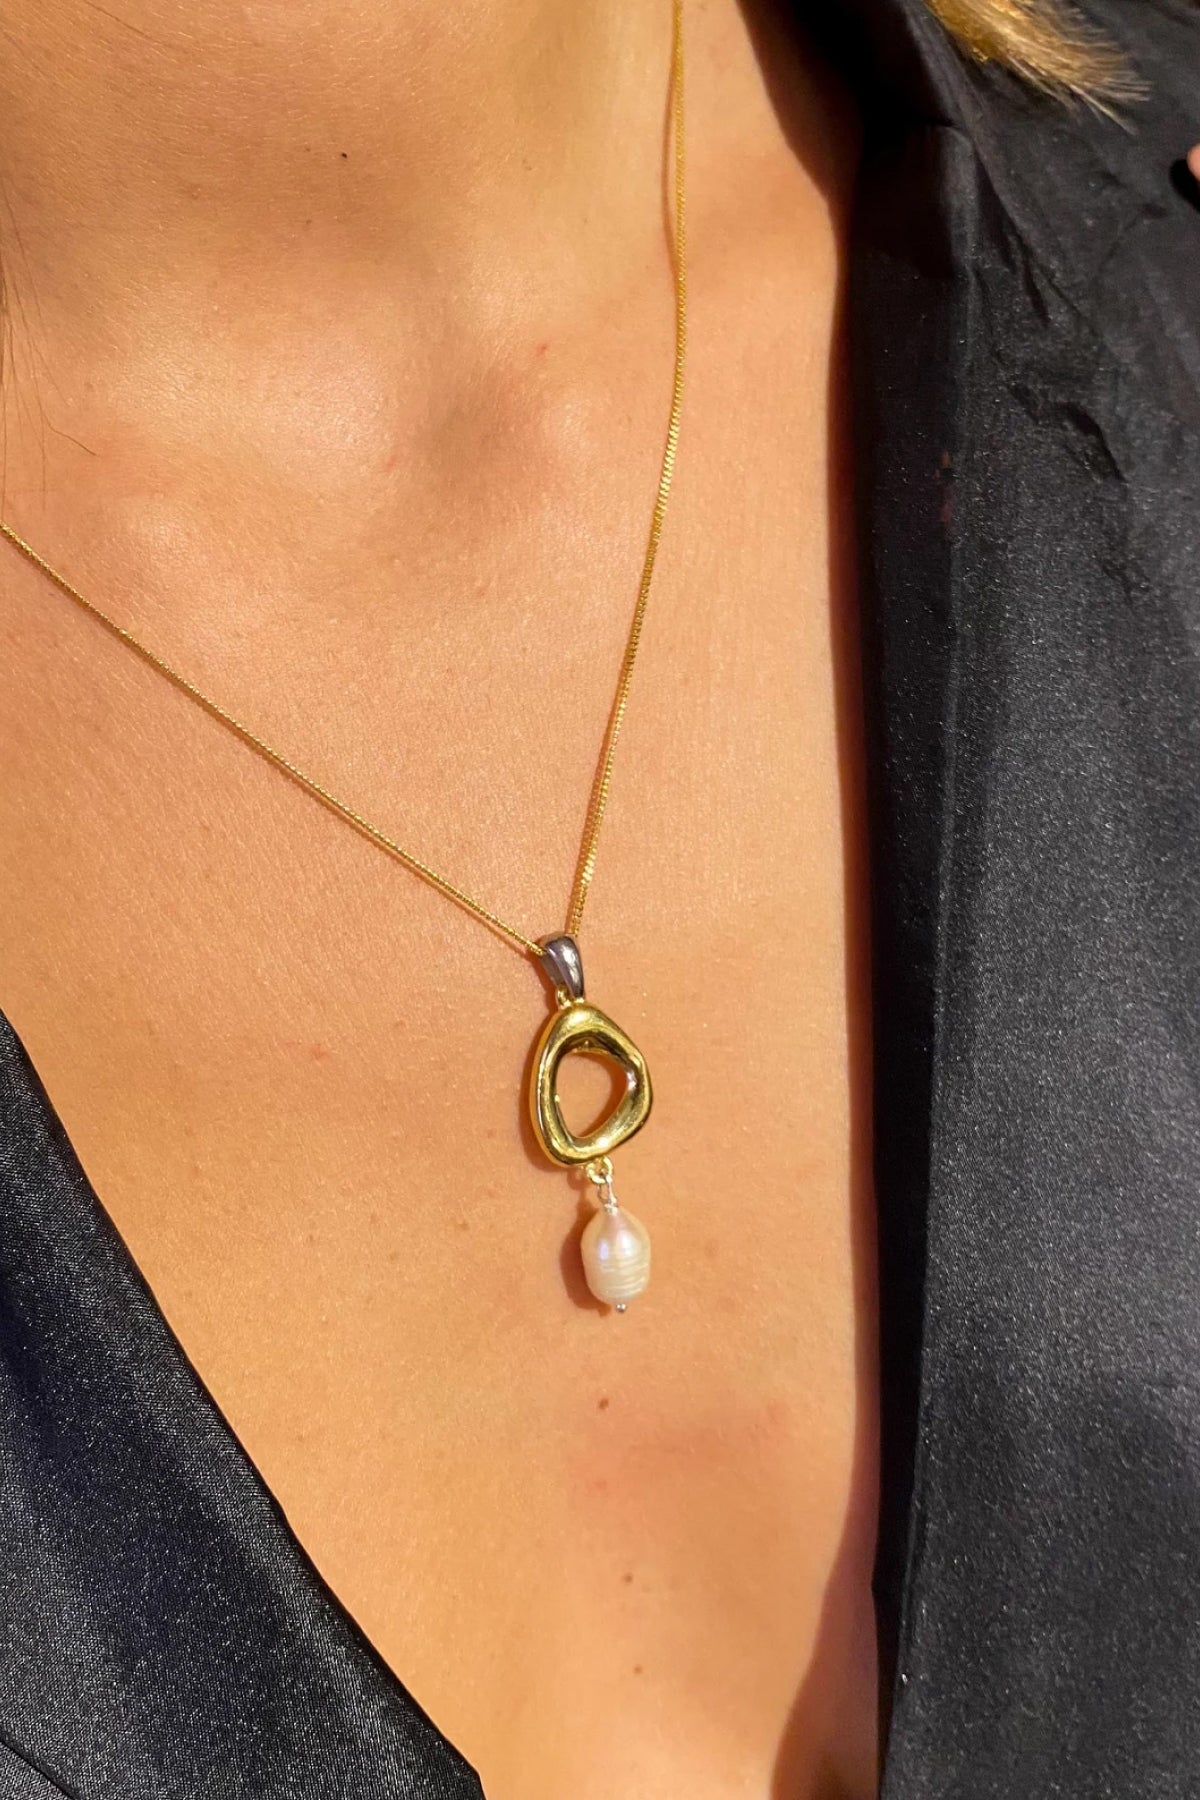 Geo Hoop 18K Gold Filled Designer Necklace with Baroque Pearl - Necklace